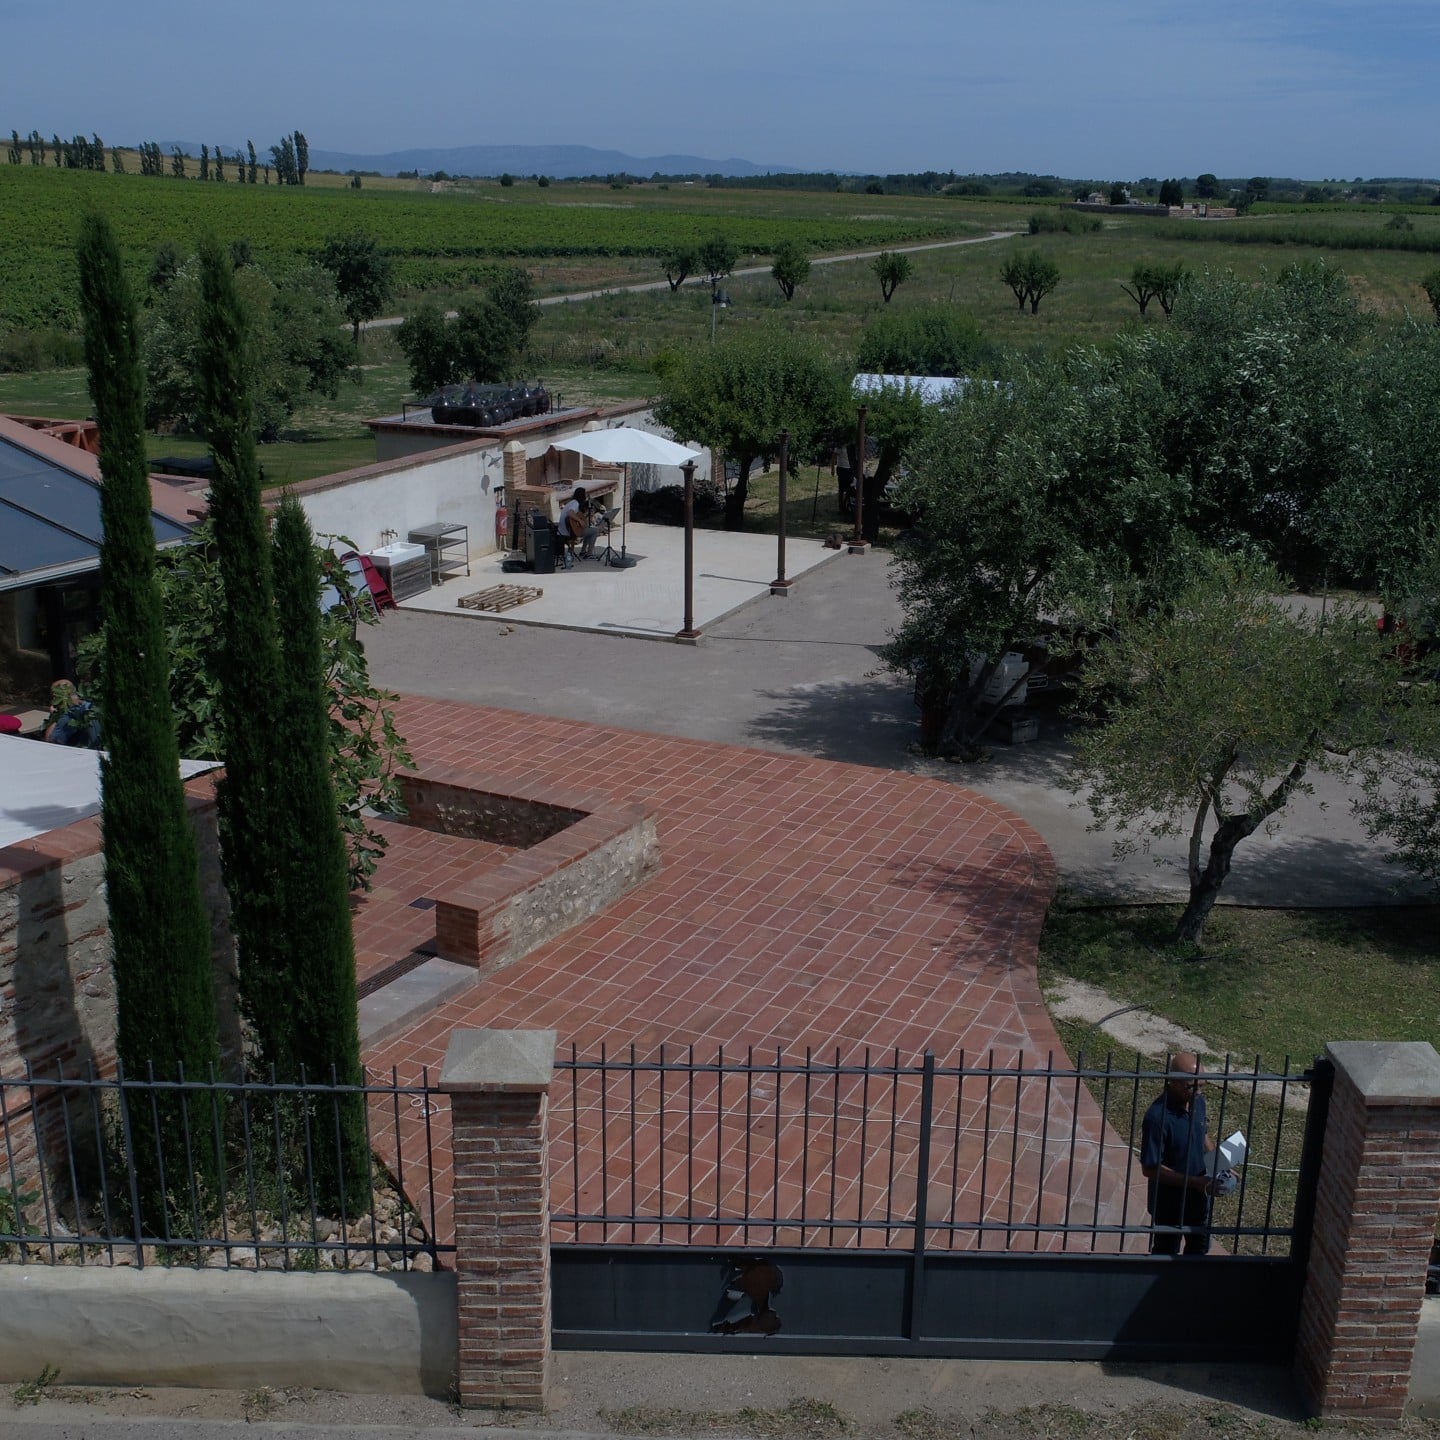 Domaine-viticole-mas-becha